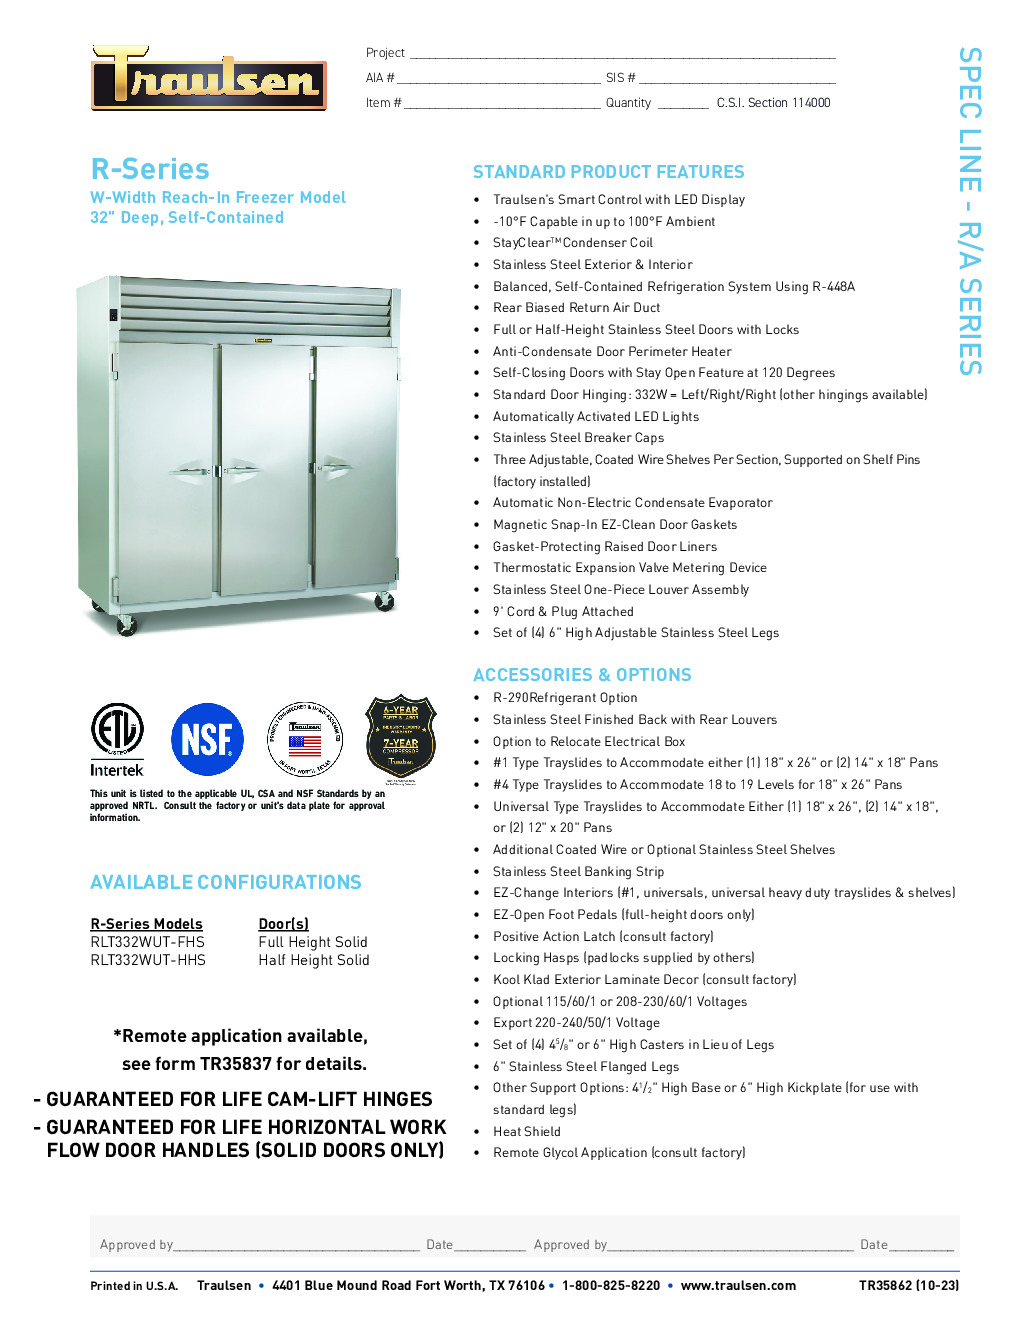 Traulsen RLT332W-FHS Reach-In Freezer